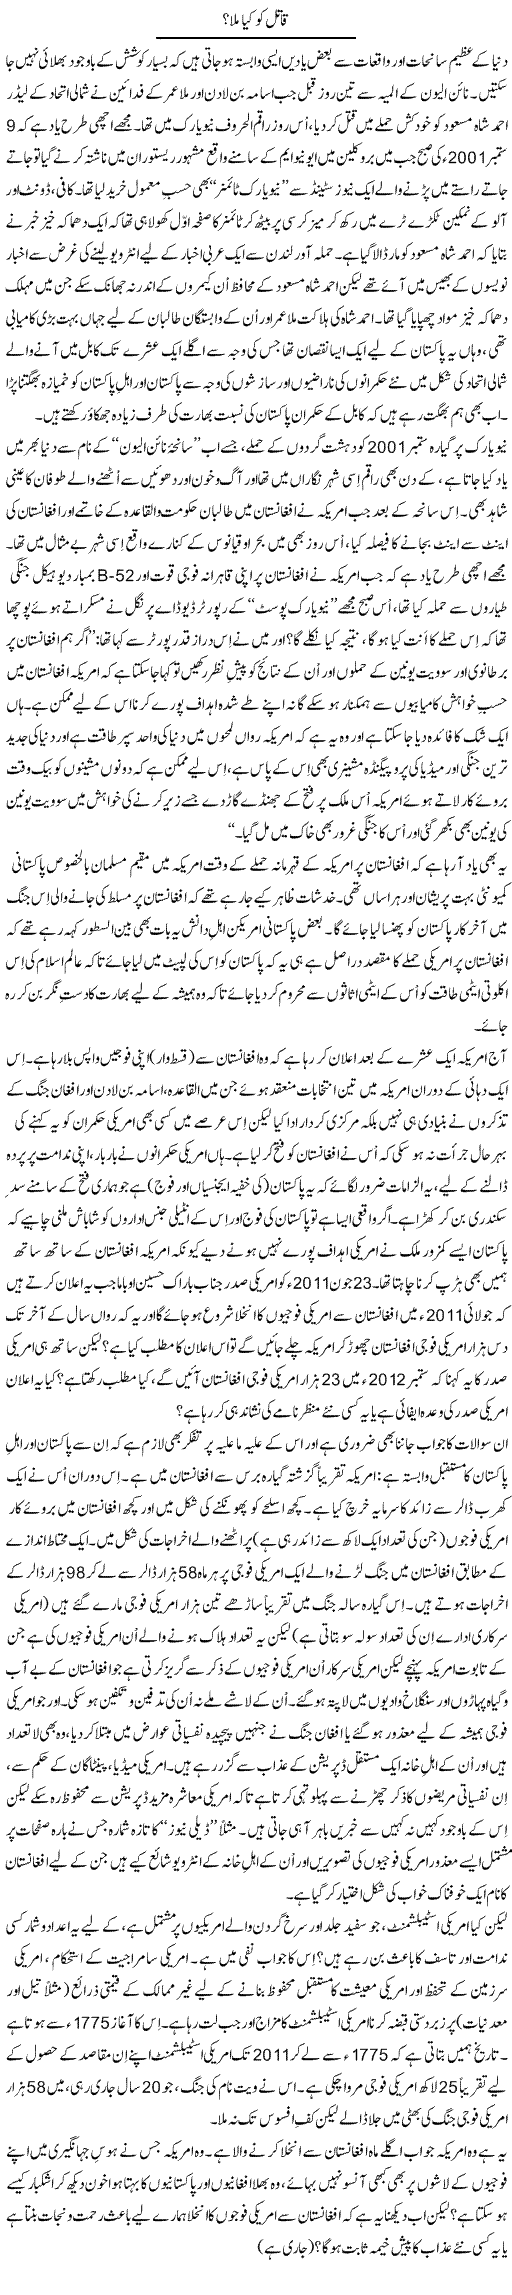 Ahmad Shah Masood Express Column Tanvir Qasir 27 June 2011